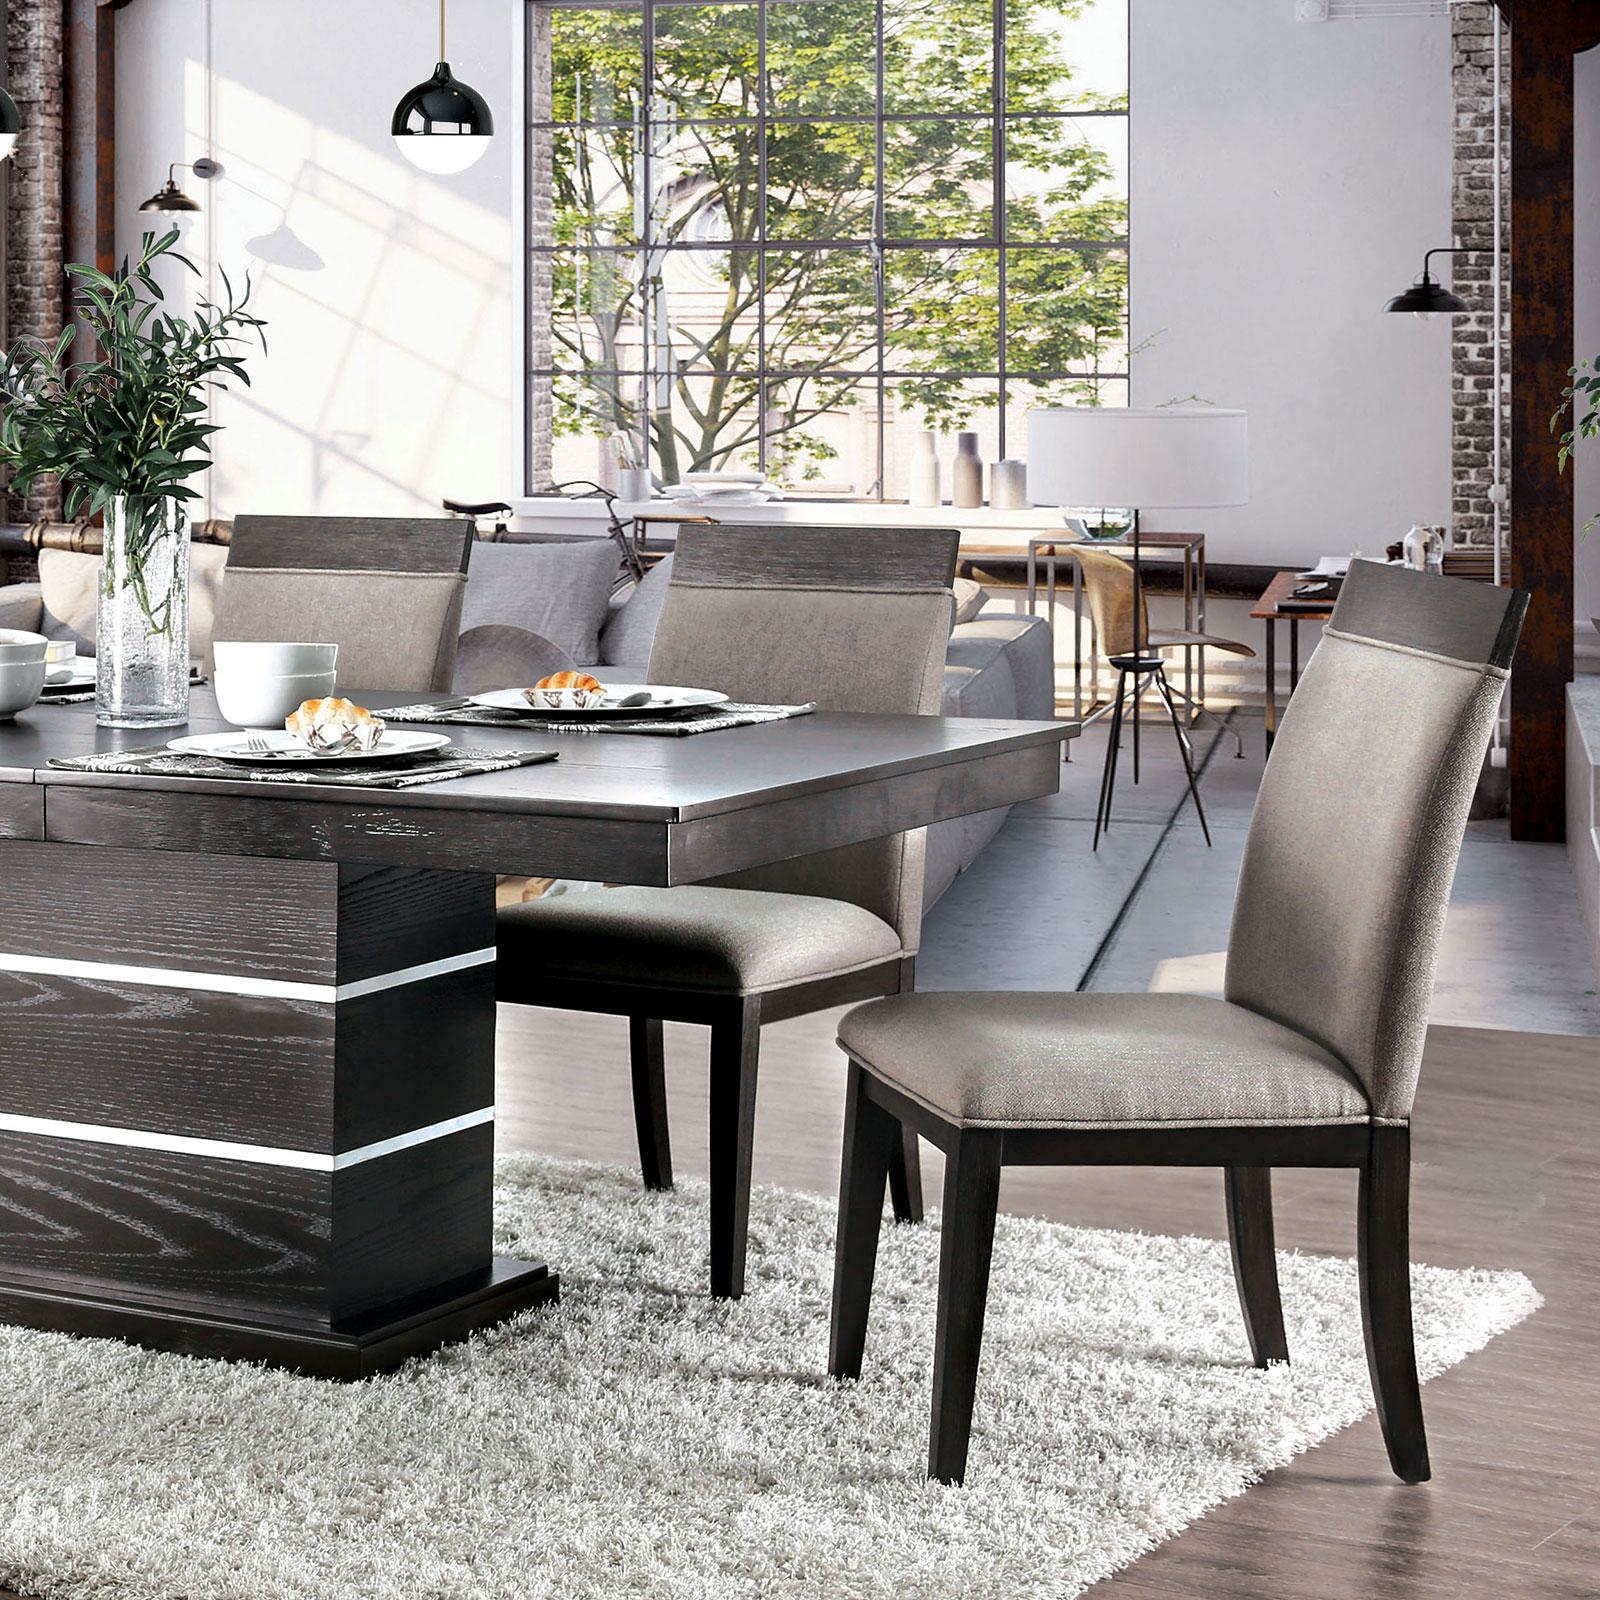 Transitional Dining Table MODOC CM3337T CM3337T in Espresso, Beige 